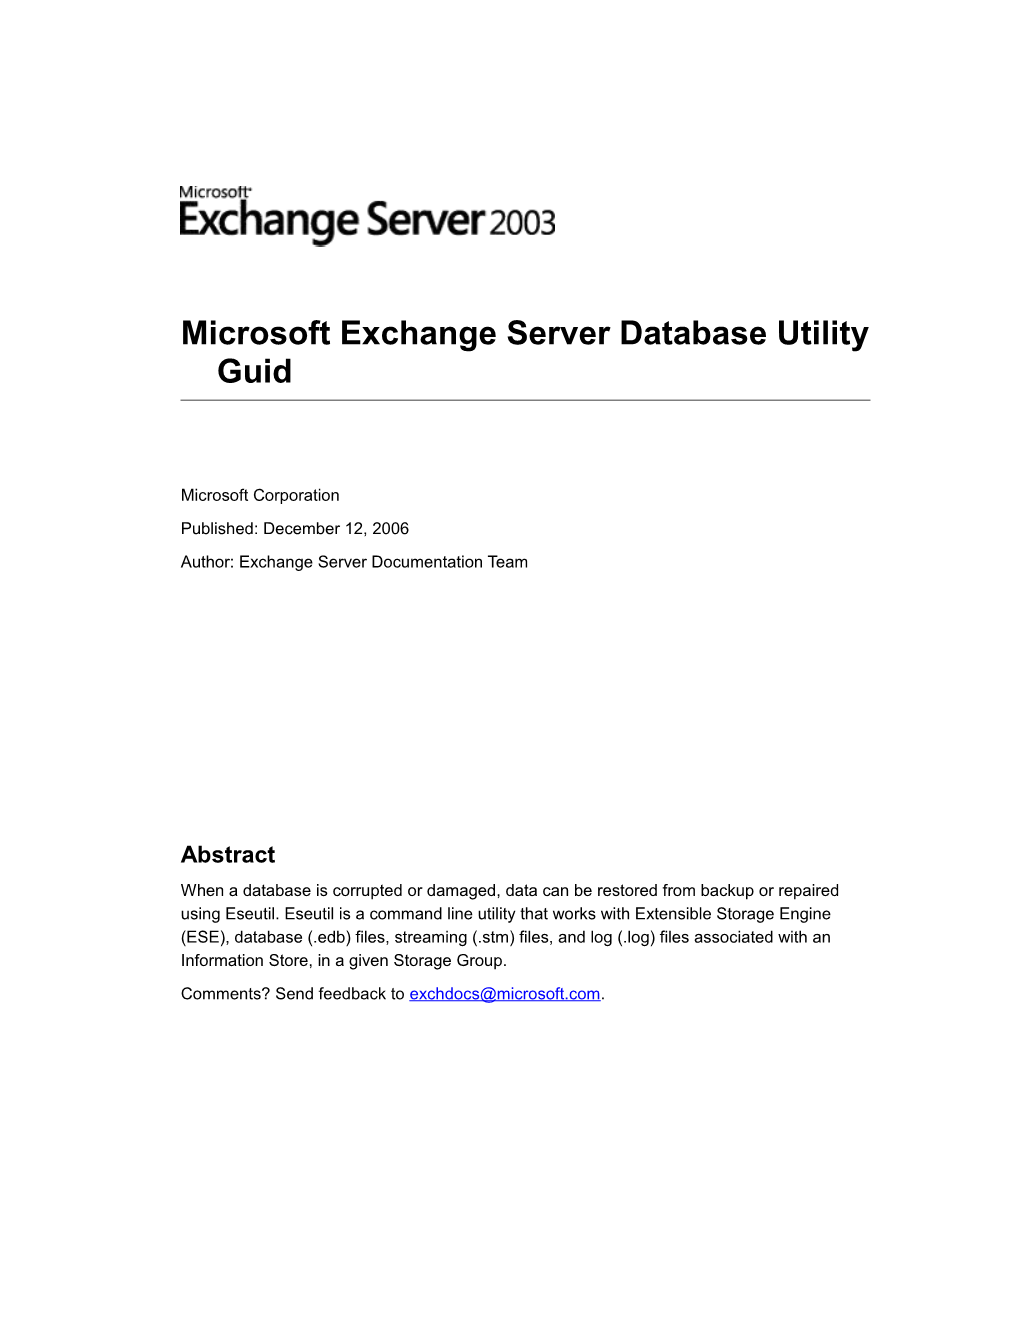 Microsoft Exchange Server Database Utility Guid